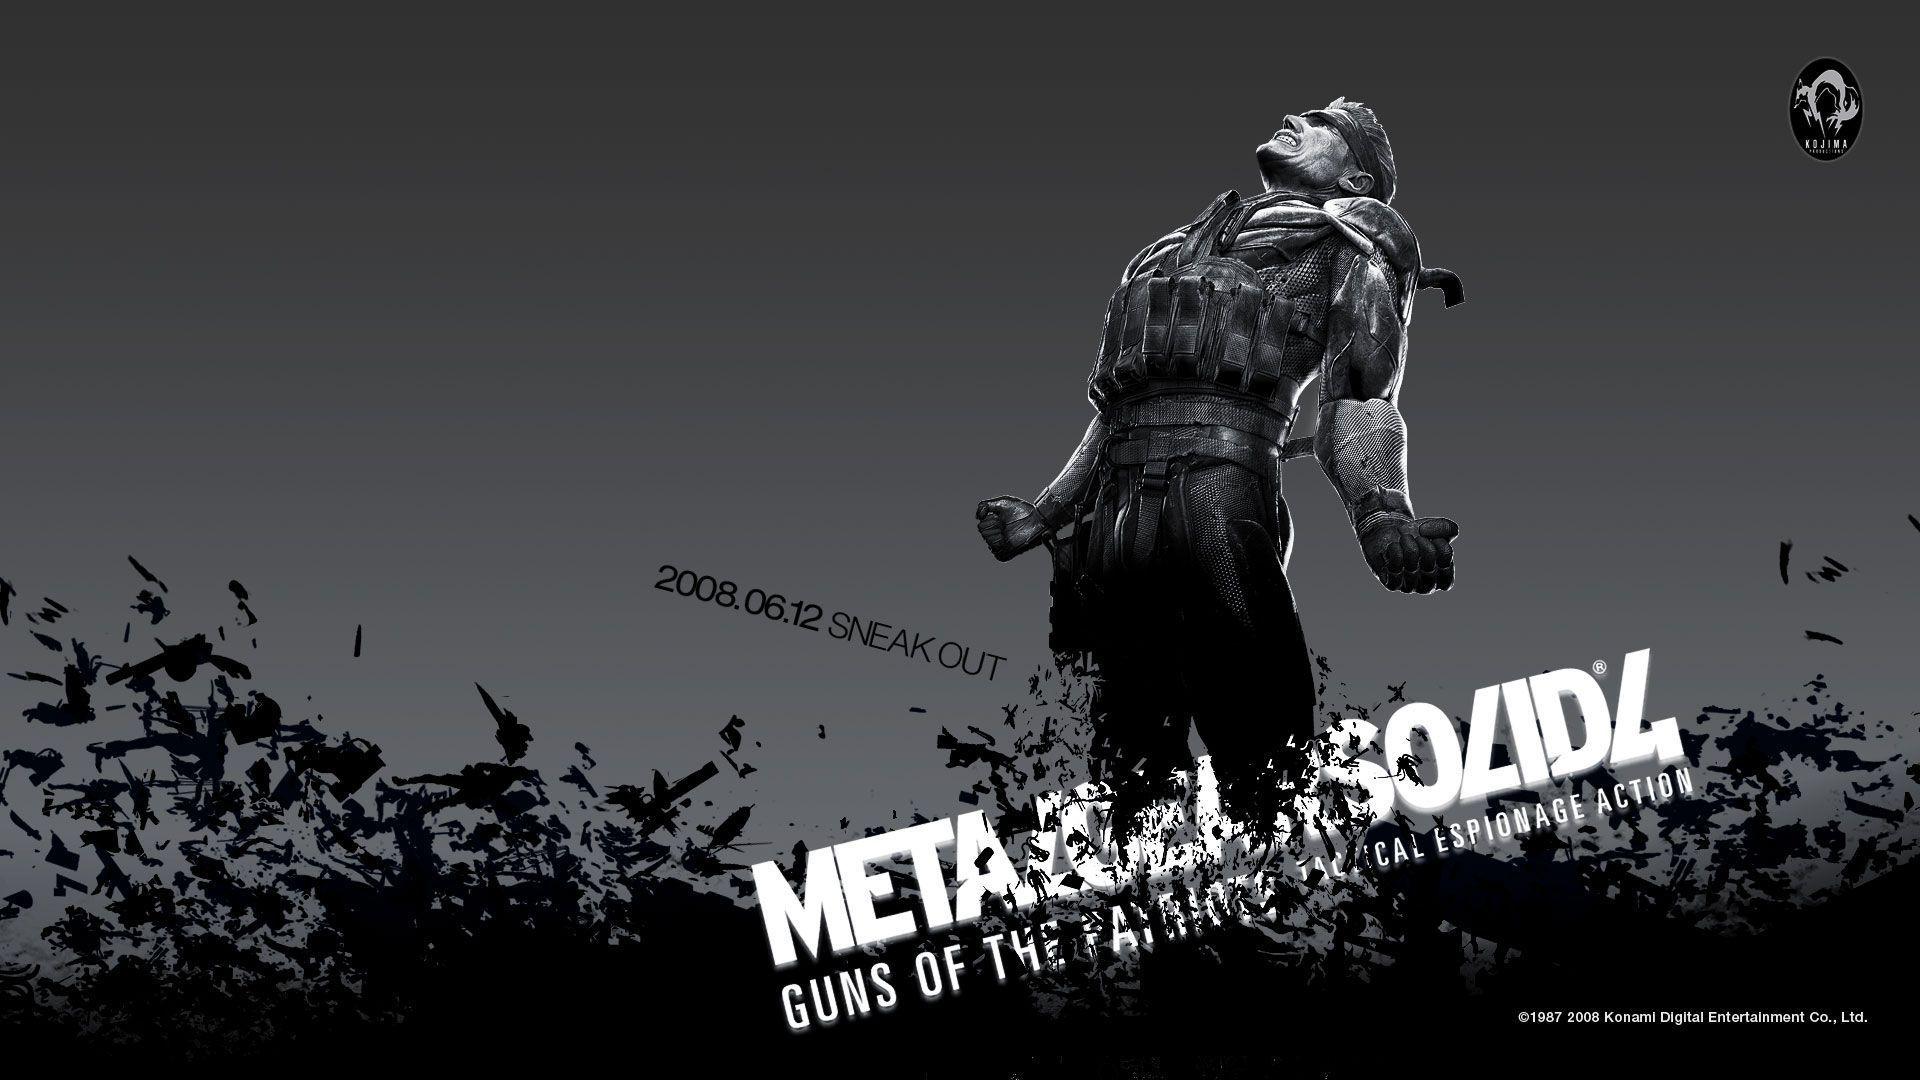 The Bit Adventures through Metal Gear: Metal Gear Solid 4: Guns